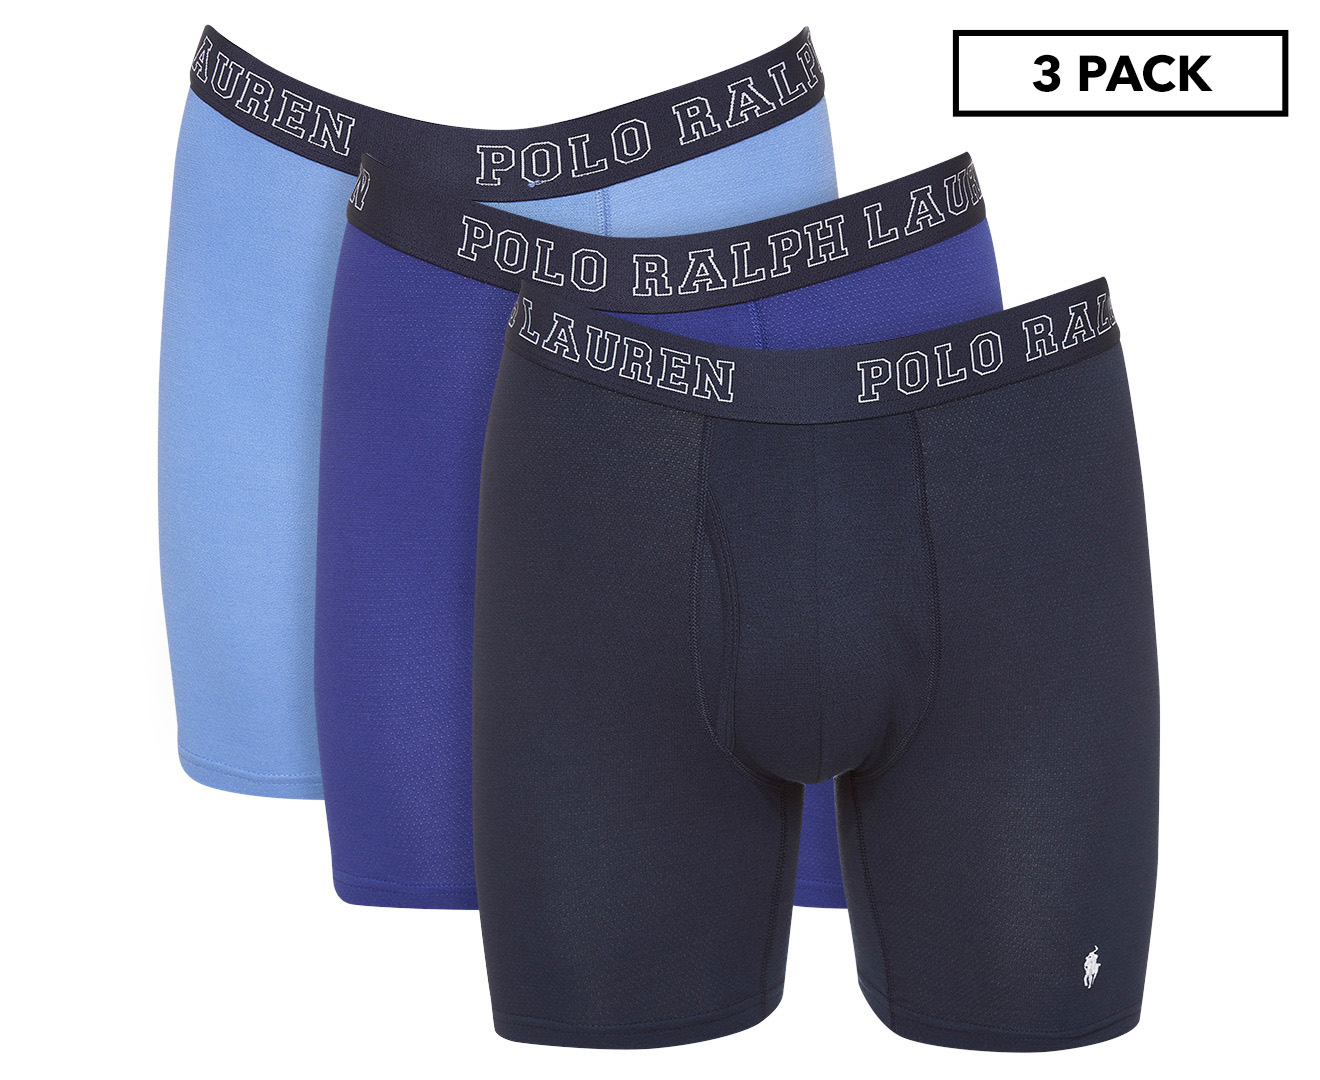 Polo Ralph Lauren Breathable Mesh Boxer Briefs 3-Pack - Cruise Navy/Blue